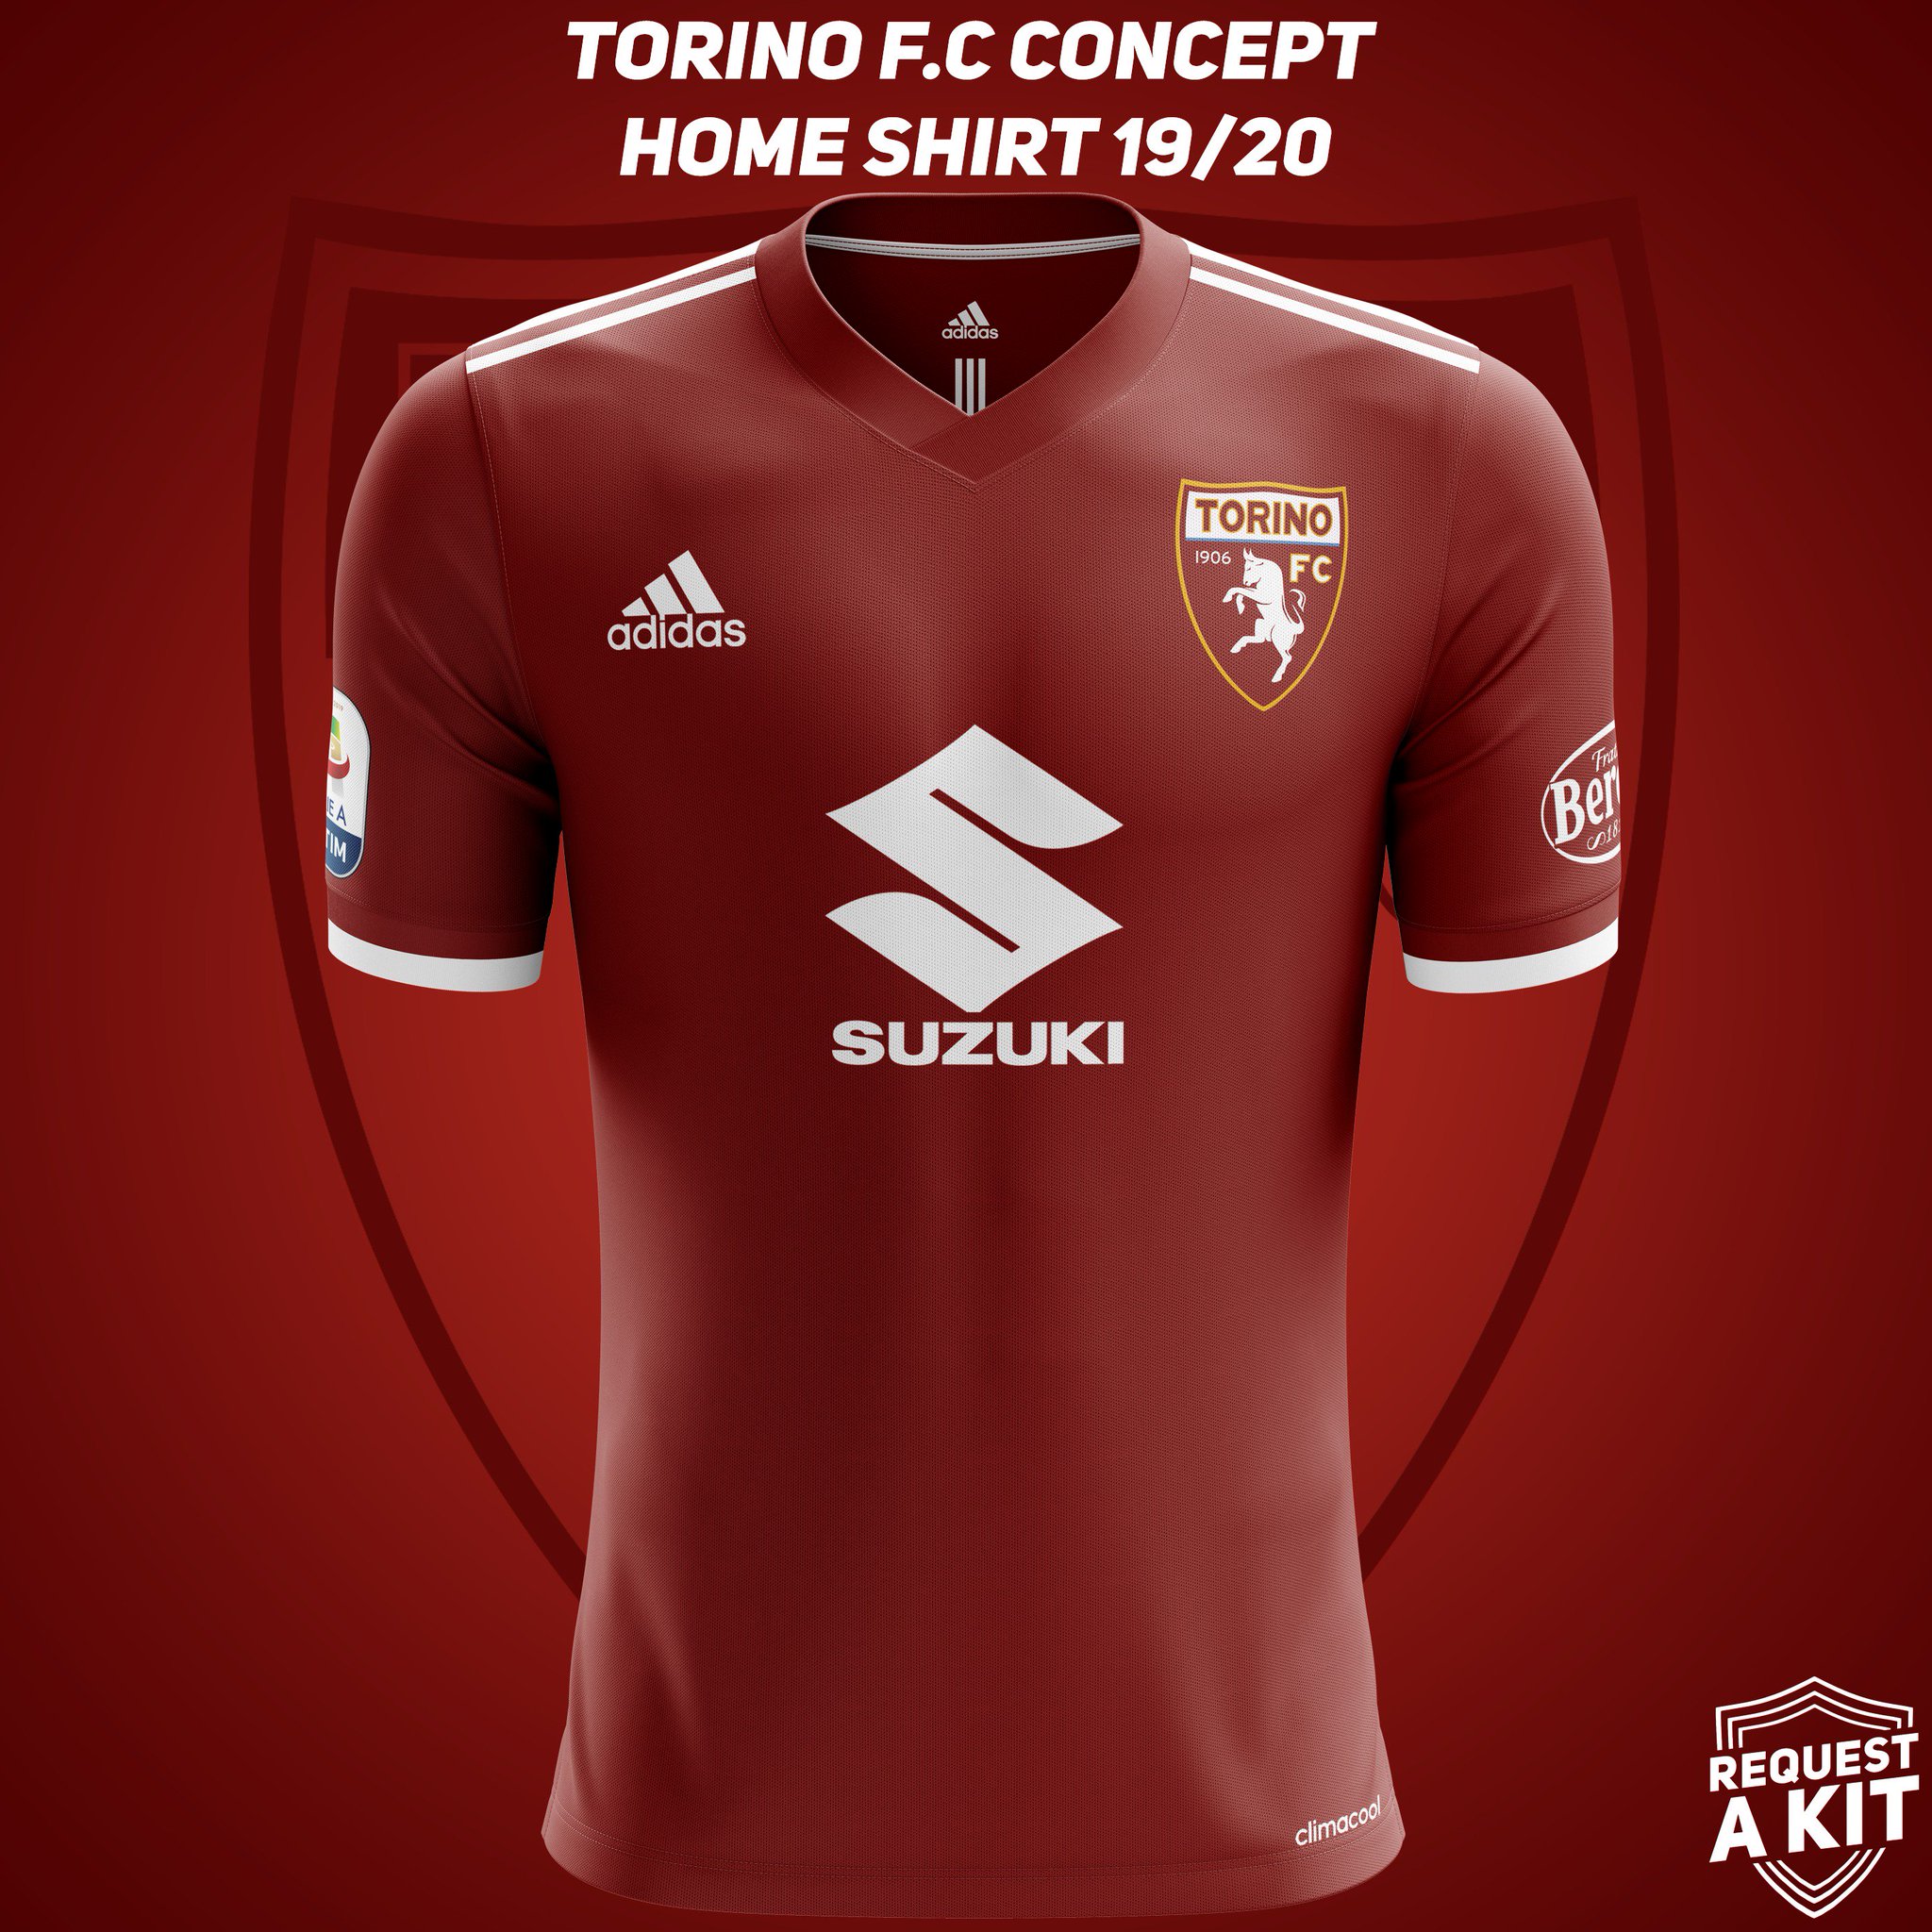 Torino FC, Adidas